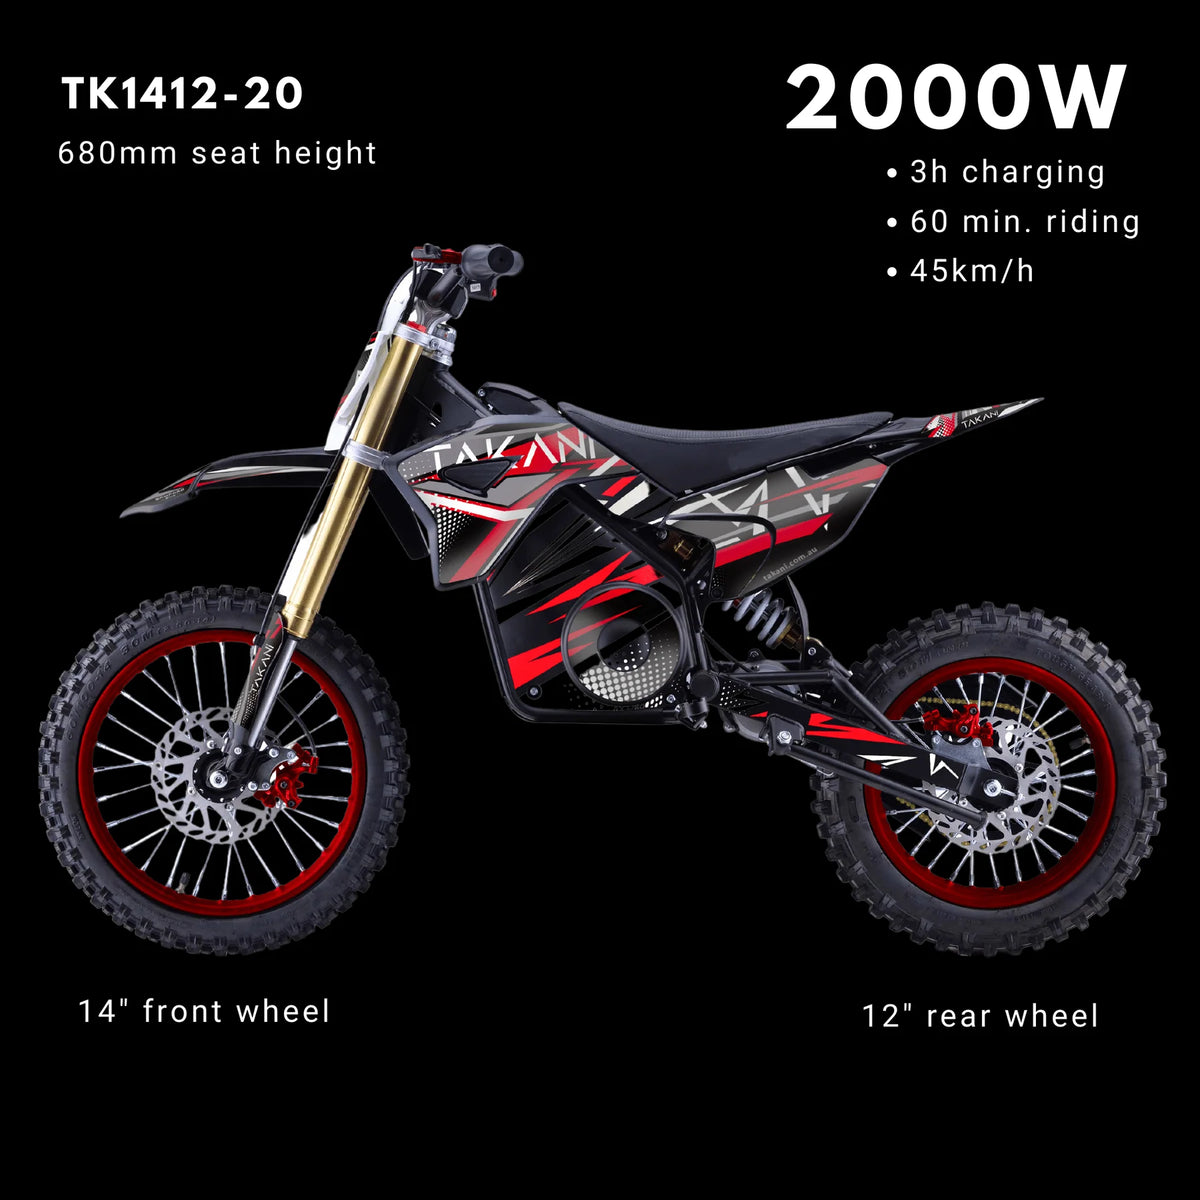 Takani TK1412-20 2000w Motor